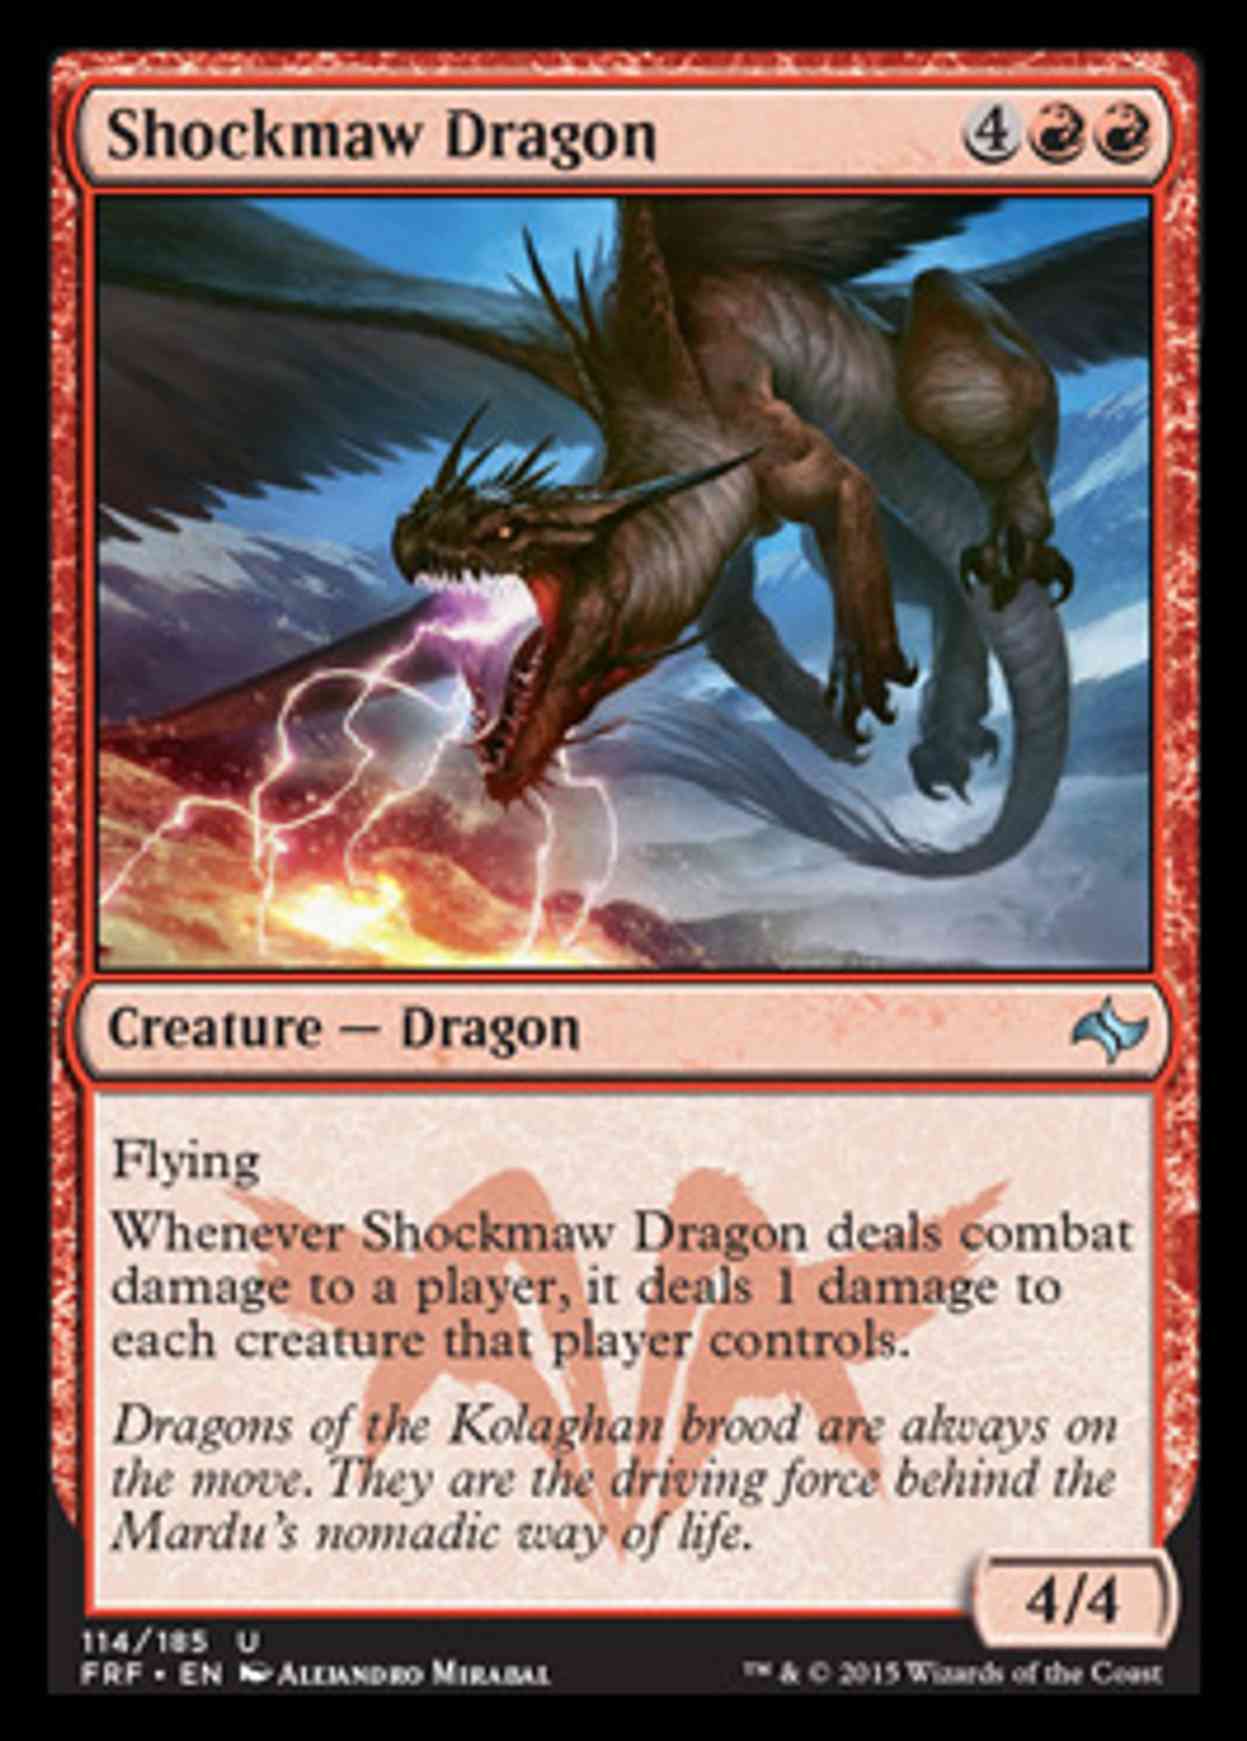 Shockmaw Dragon magic card front